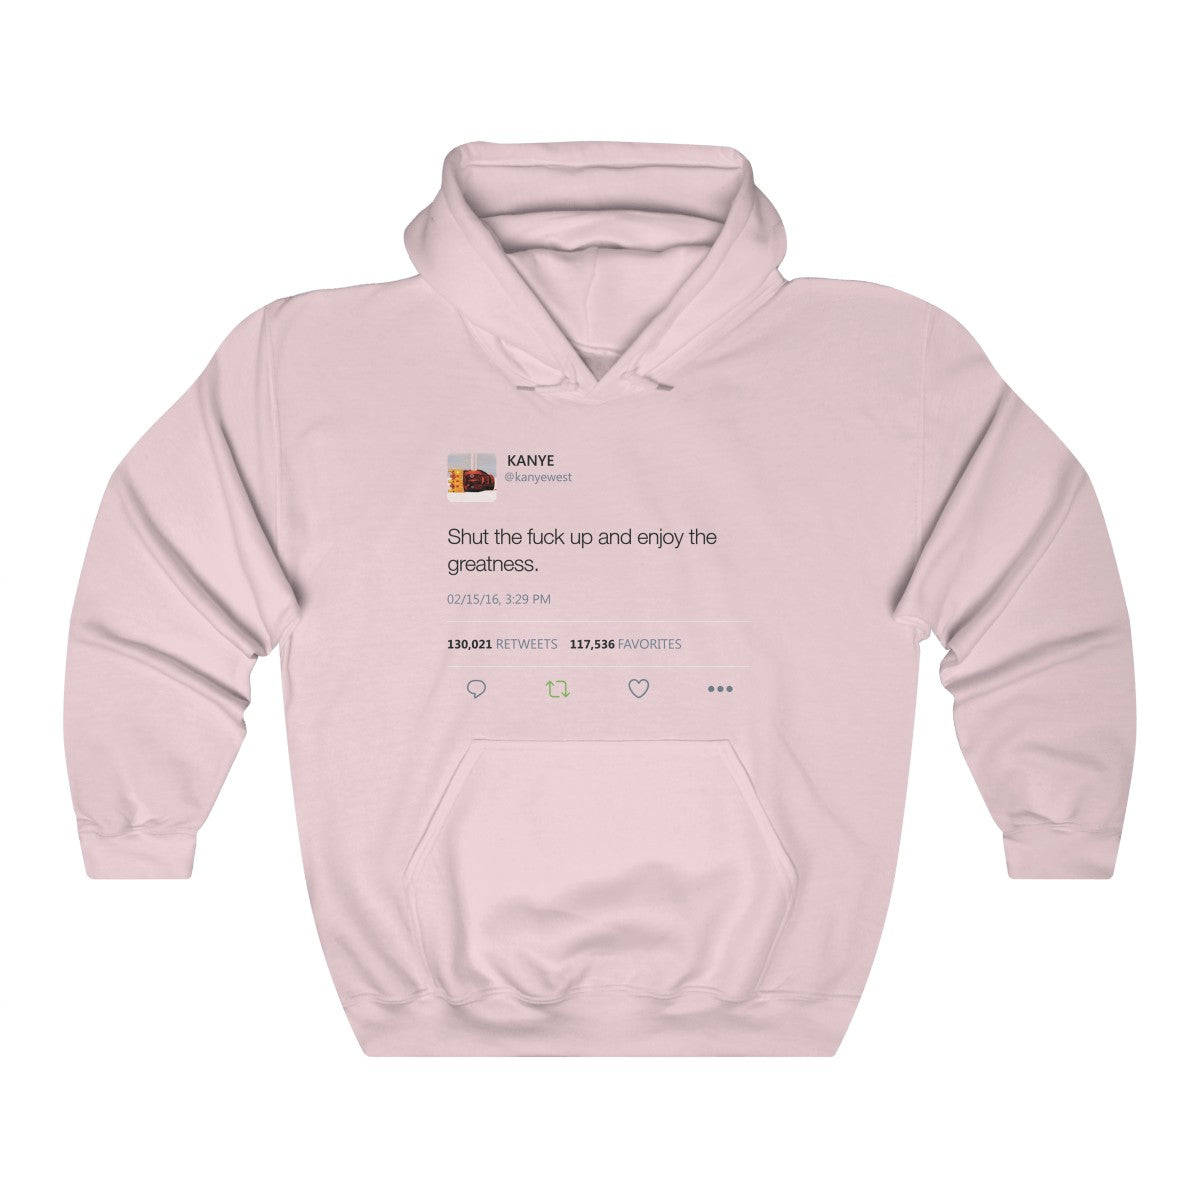 Shut the fuck up and enjoy the greatness - Kanye West Tweet Inspired Unisex Hooded Sweatshirt Hoodie-Light Pink-S-Archethype